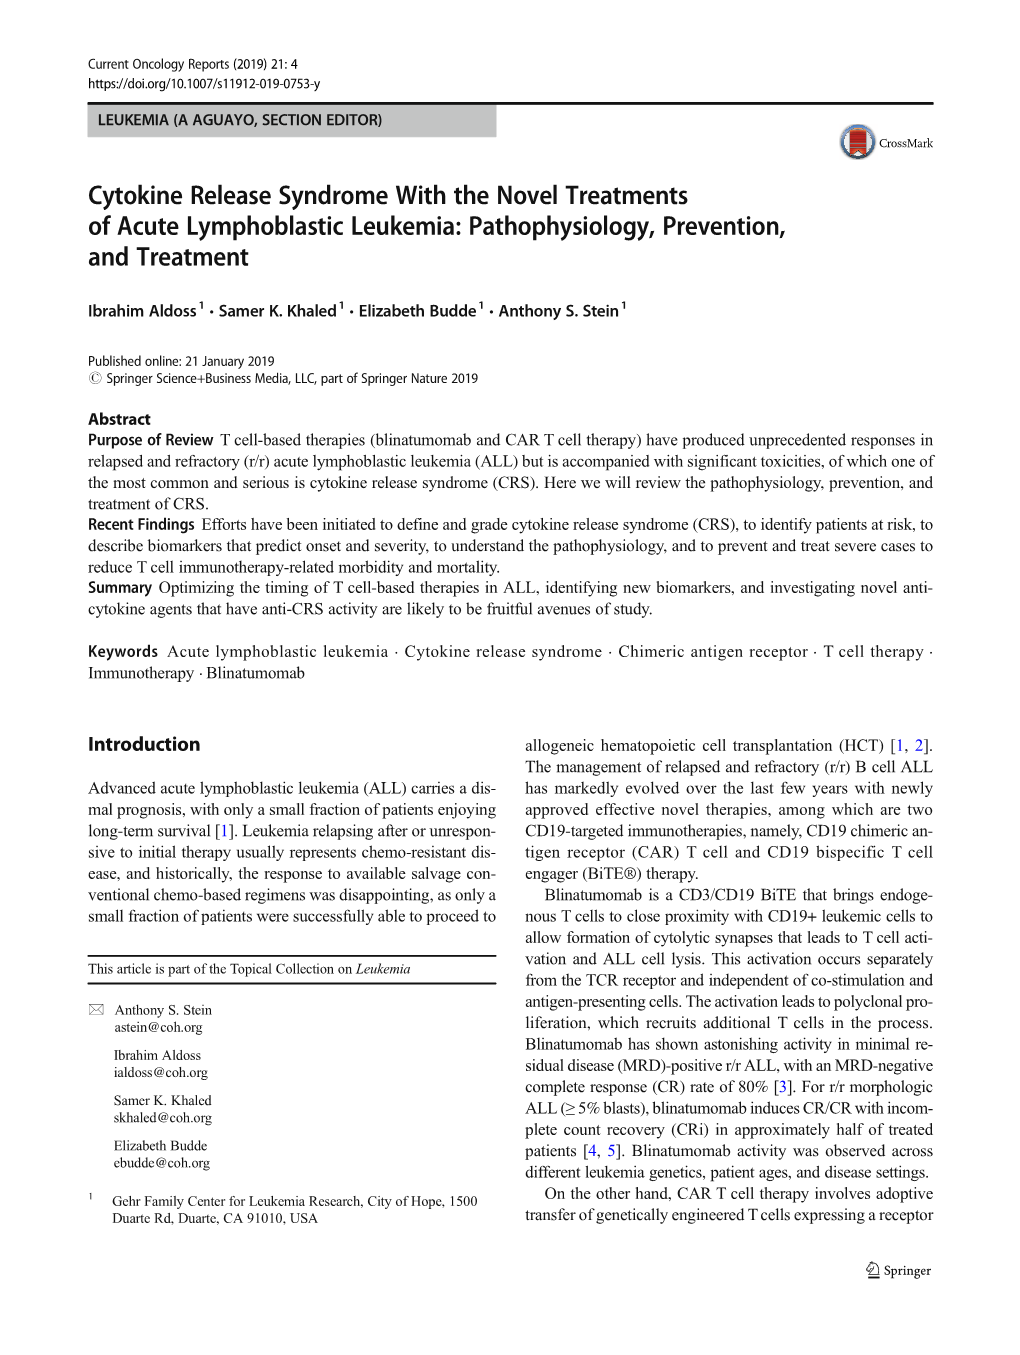 Cytokine Release Syndrome with the Novel Treatments of Acute Lymphoblastic Leukemia: Pathophysiology, Prevention, and Treatment